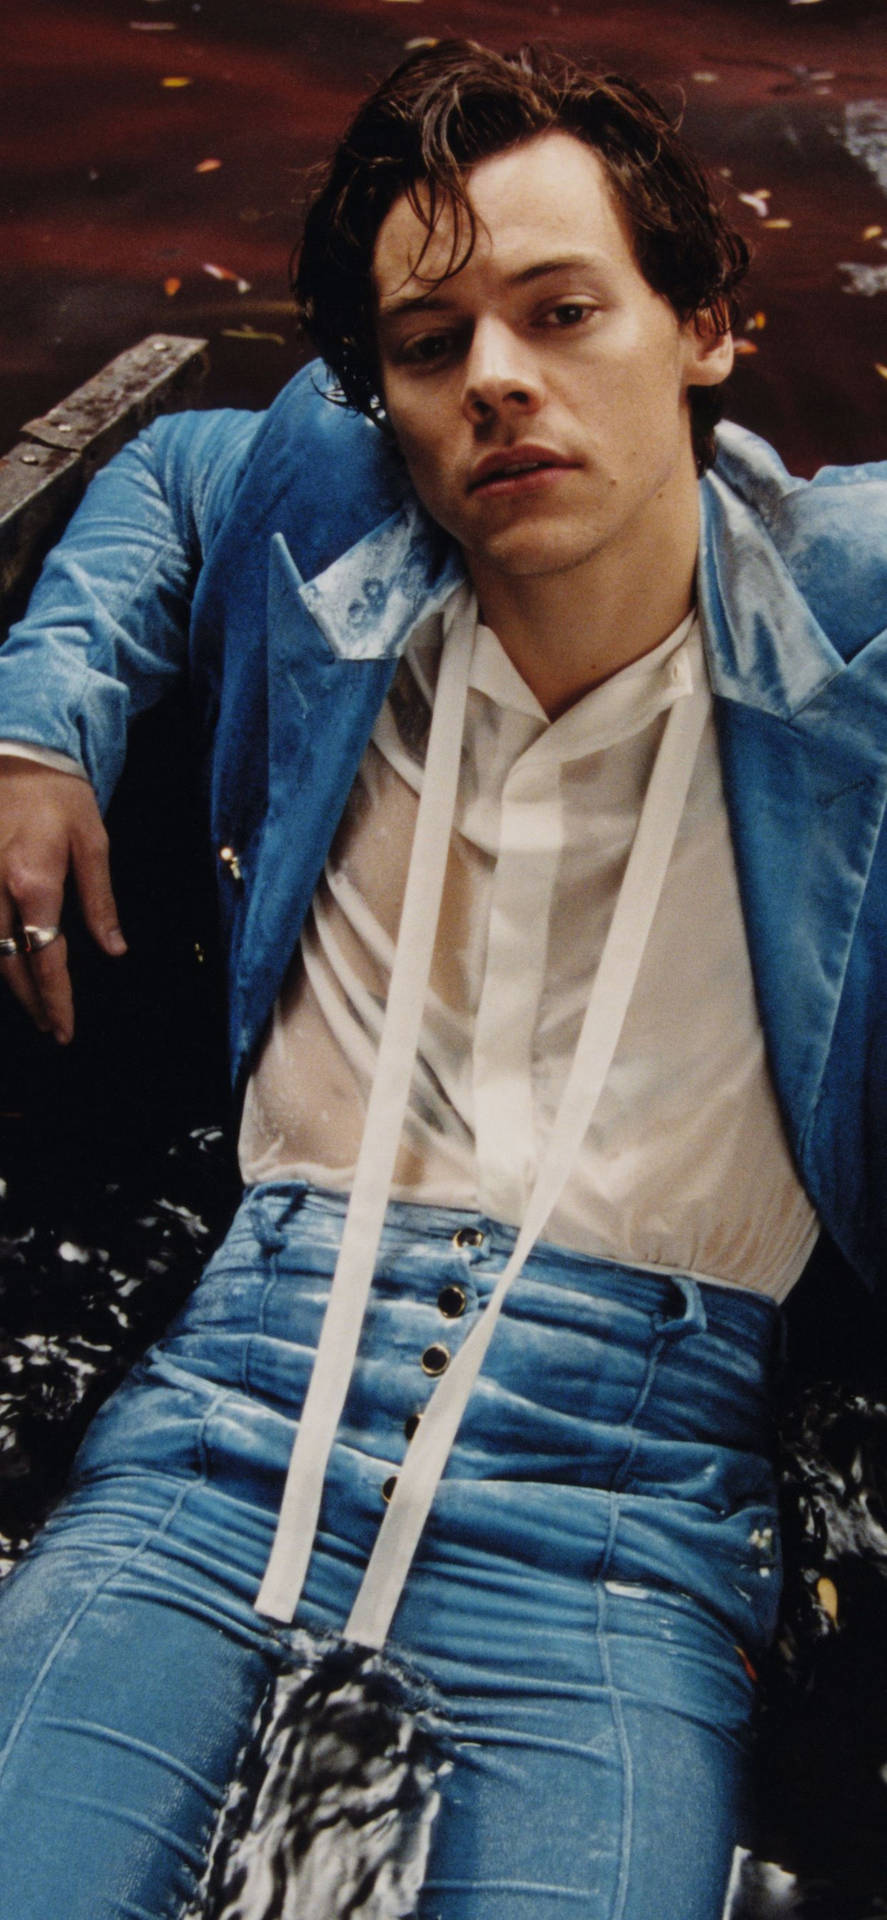 Harry Styles In Denim Jacket Background